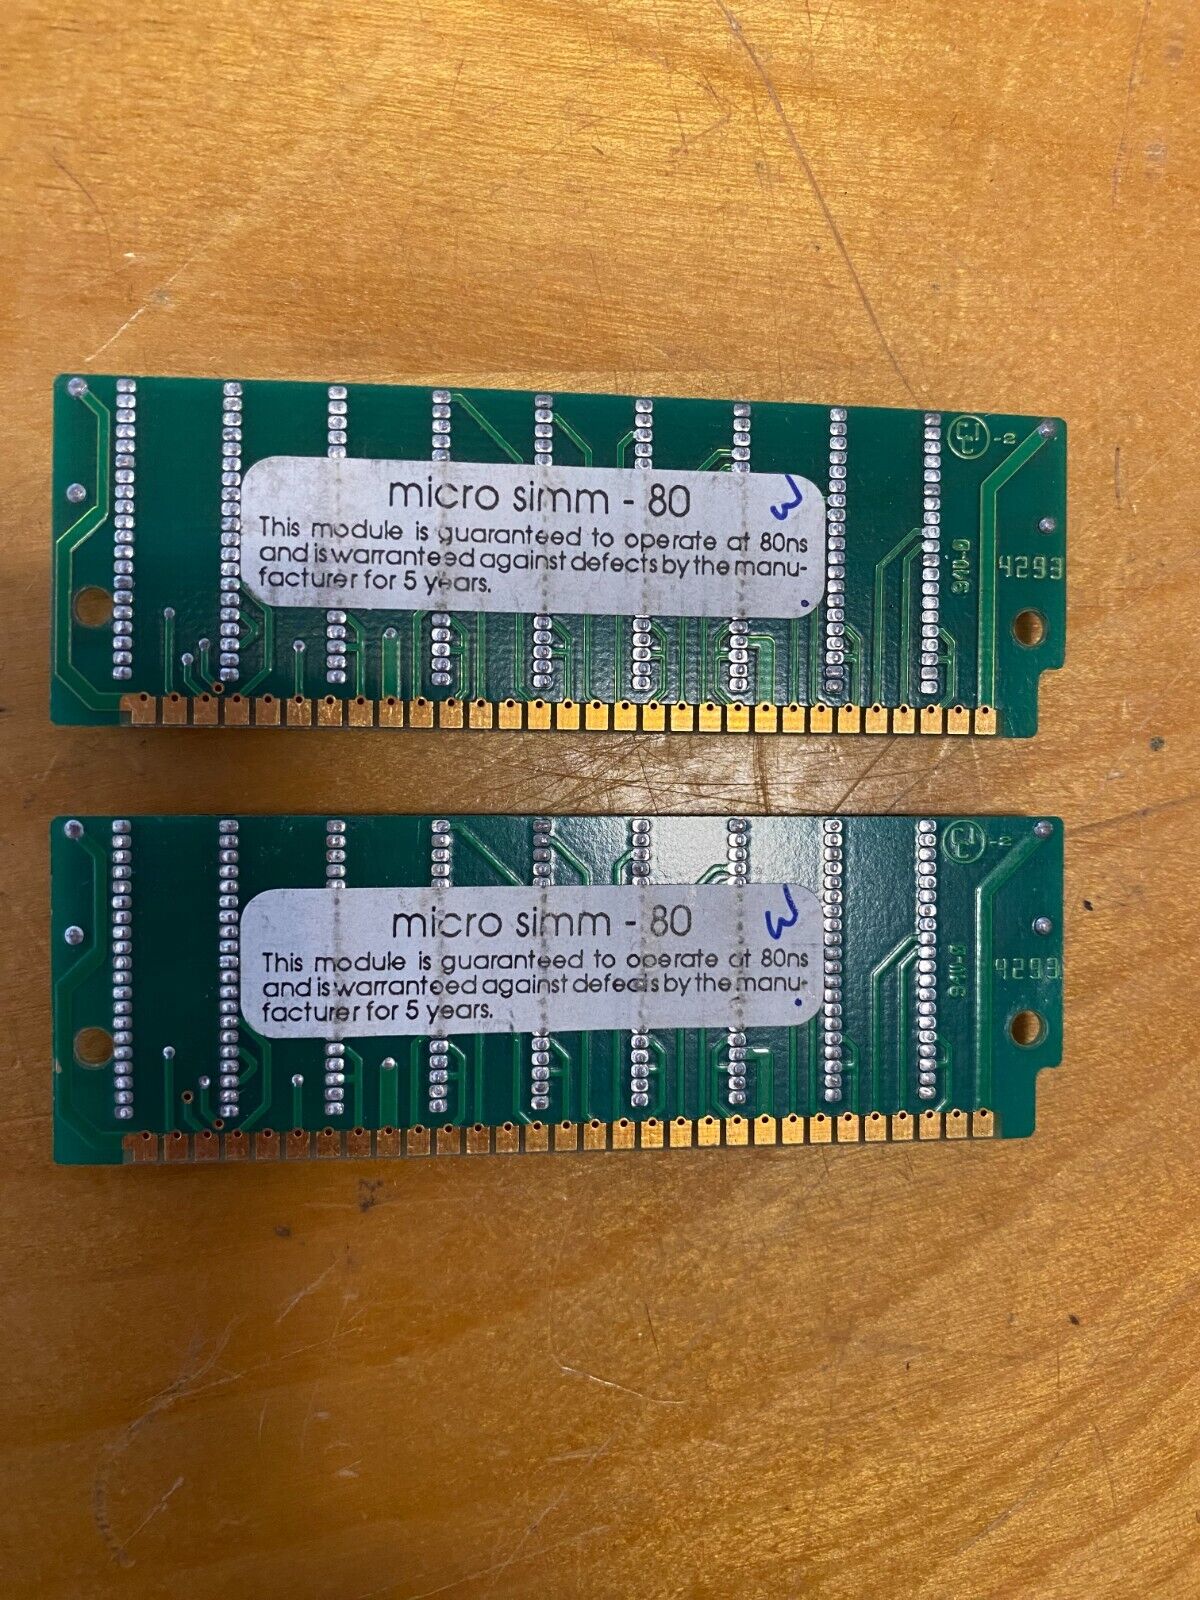 Vintage micro simm-80 30 pin memory